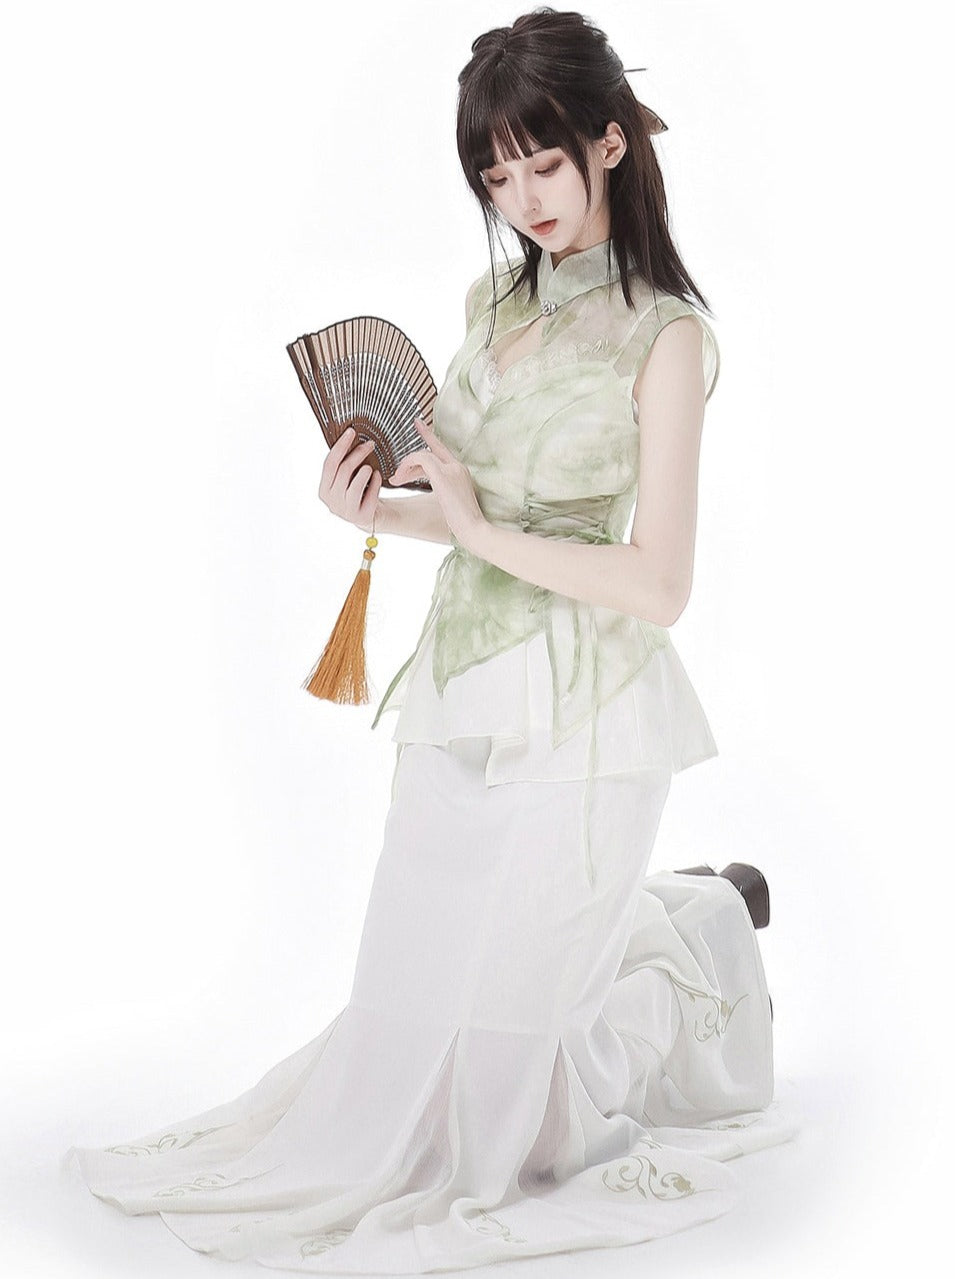 White Green Sleeveless Elegant Top + Camisole + Mermaid Skirt